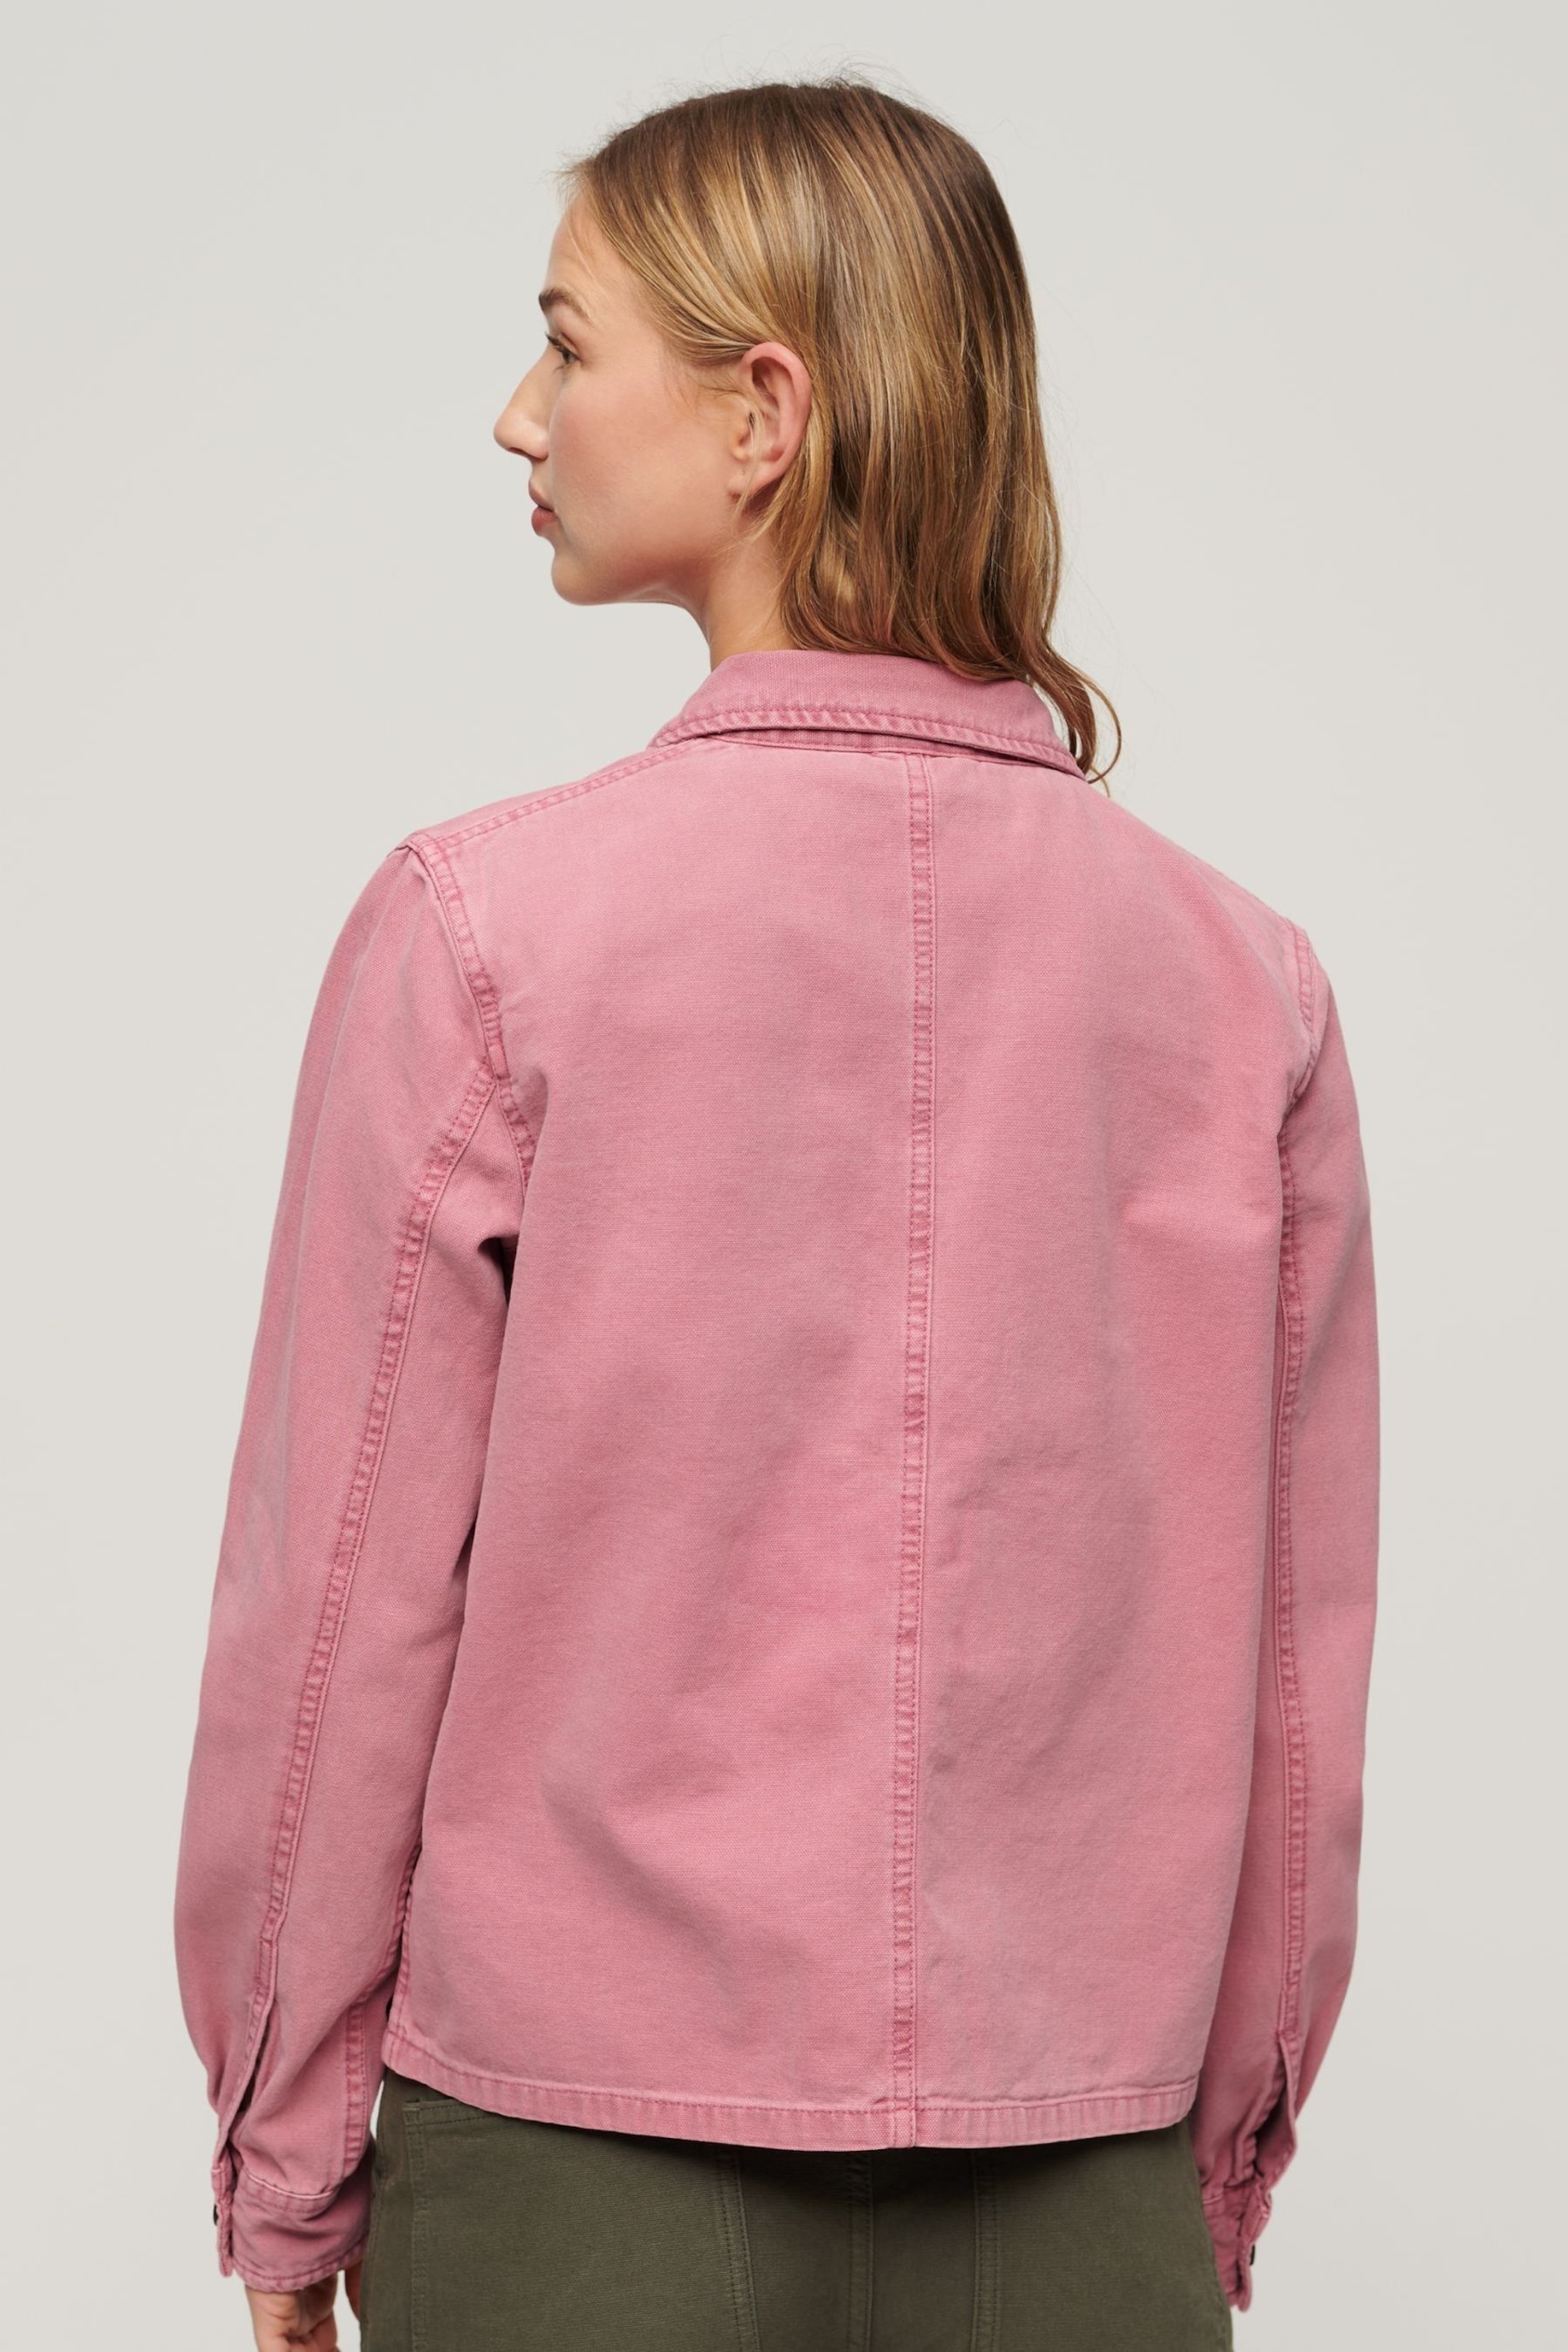 Superdry Pink Four Pocket Chore Jacket - Image 2 of 3